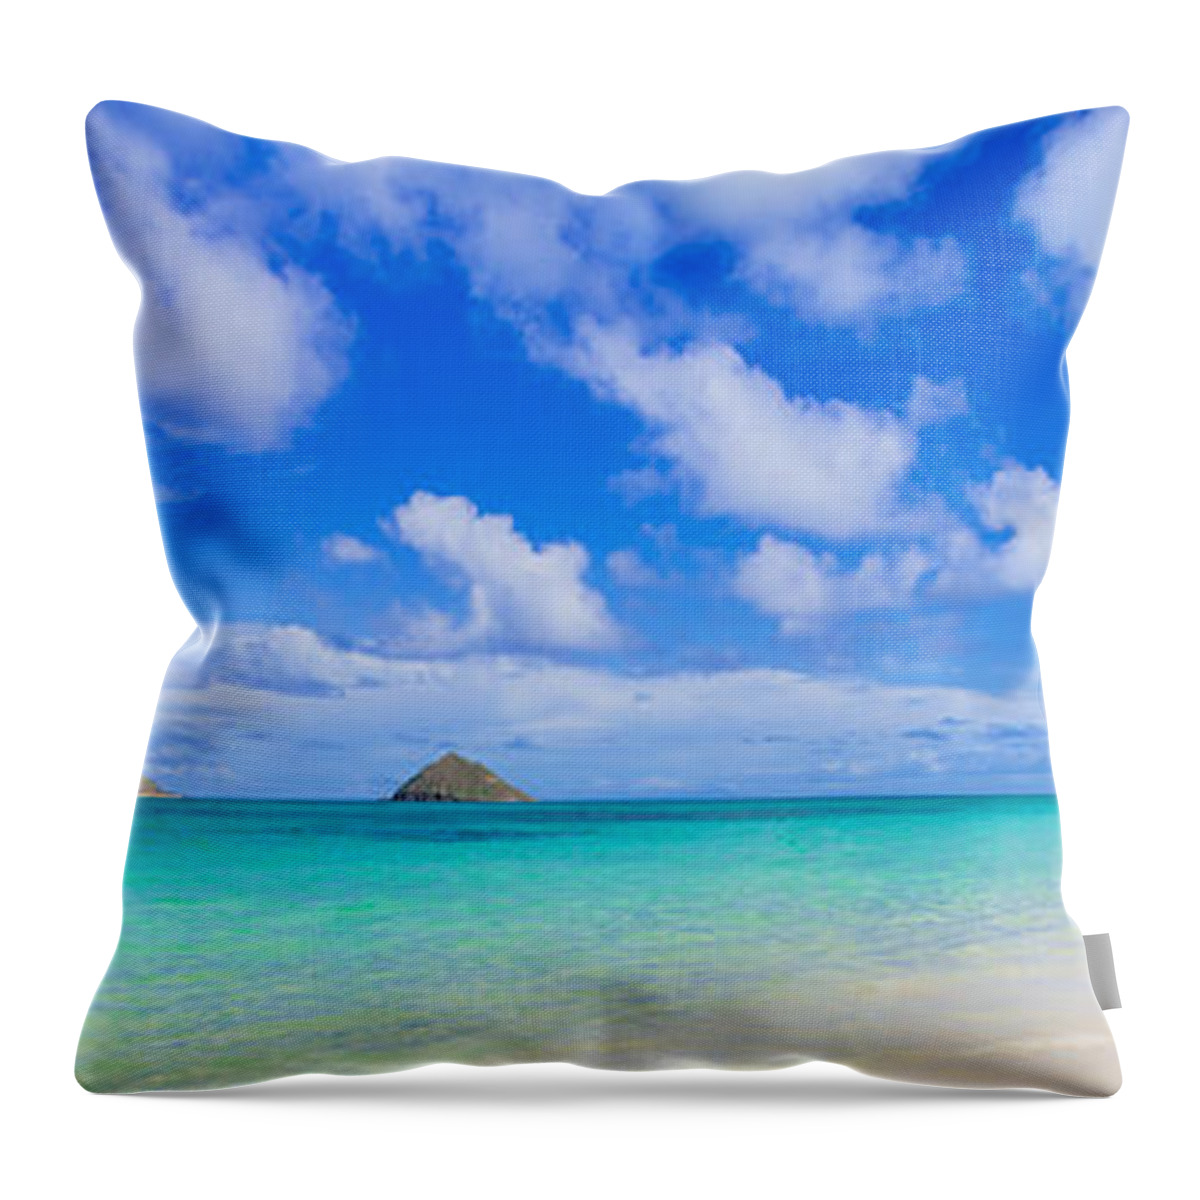 Lanikai Beach Throw Pillow featuring the photograph Lanikai Beach Tranquility 3 to 1 Aspect Ratio by Aloha Art